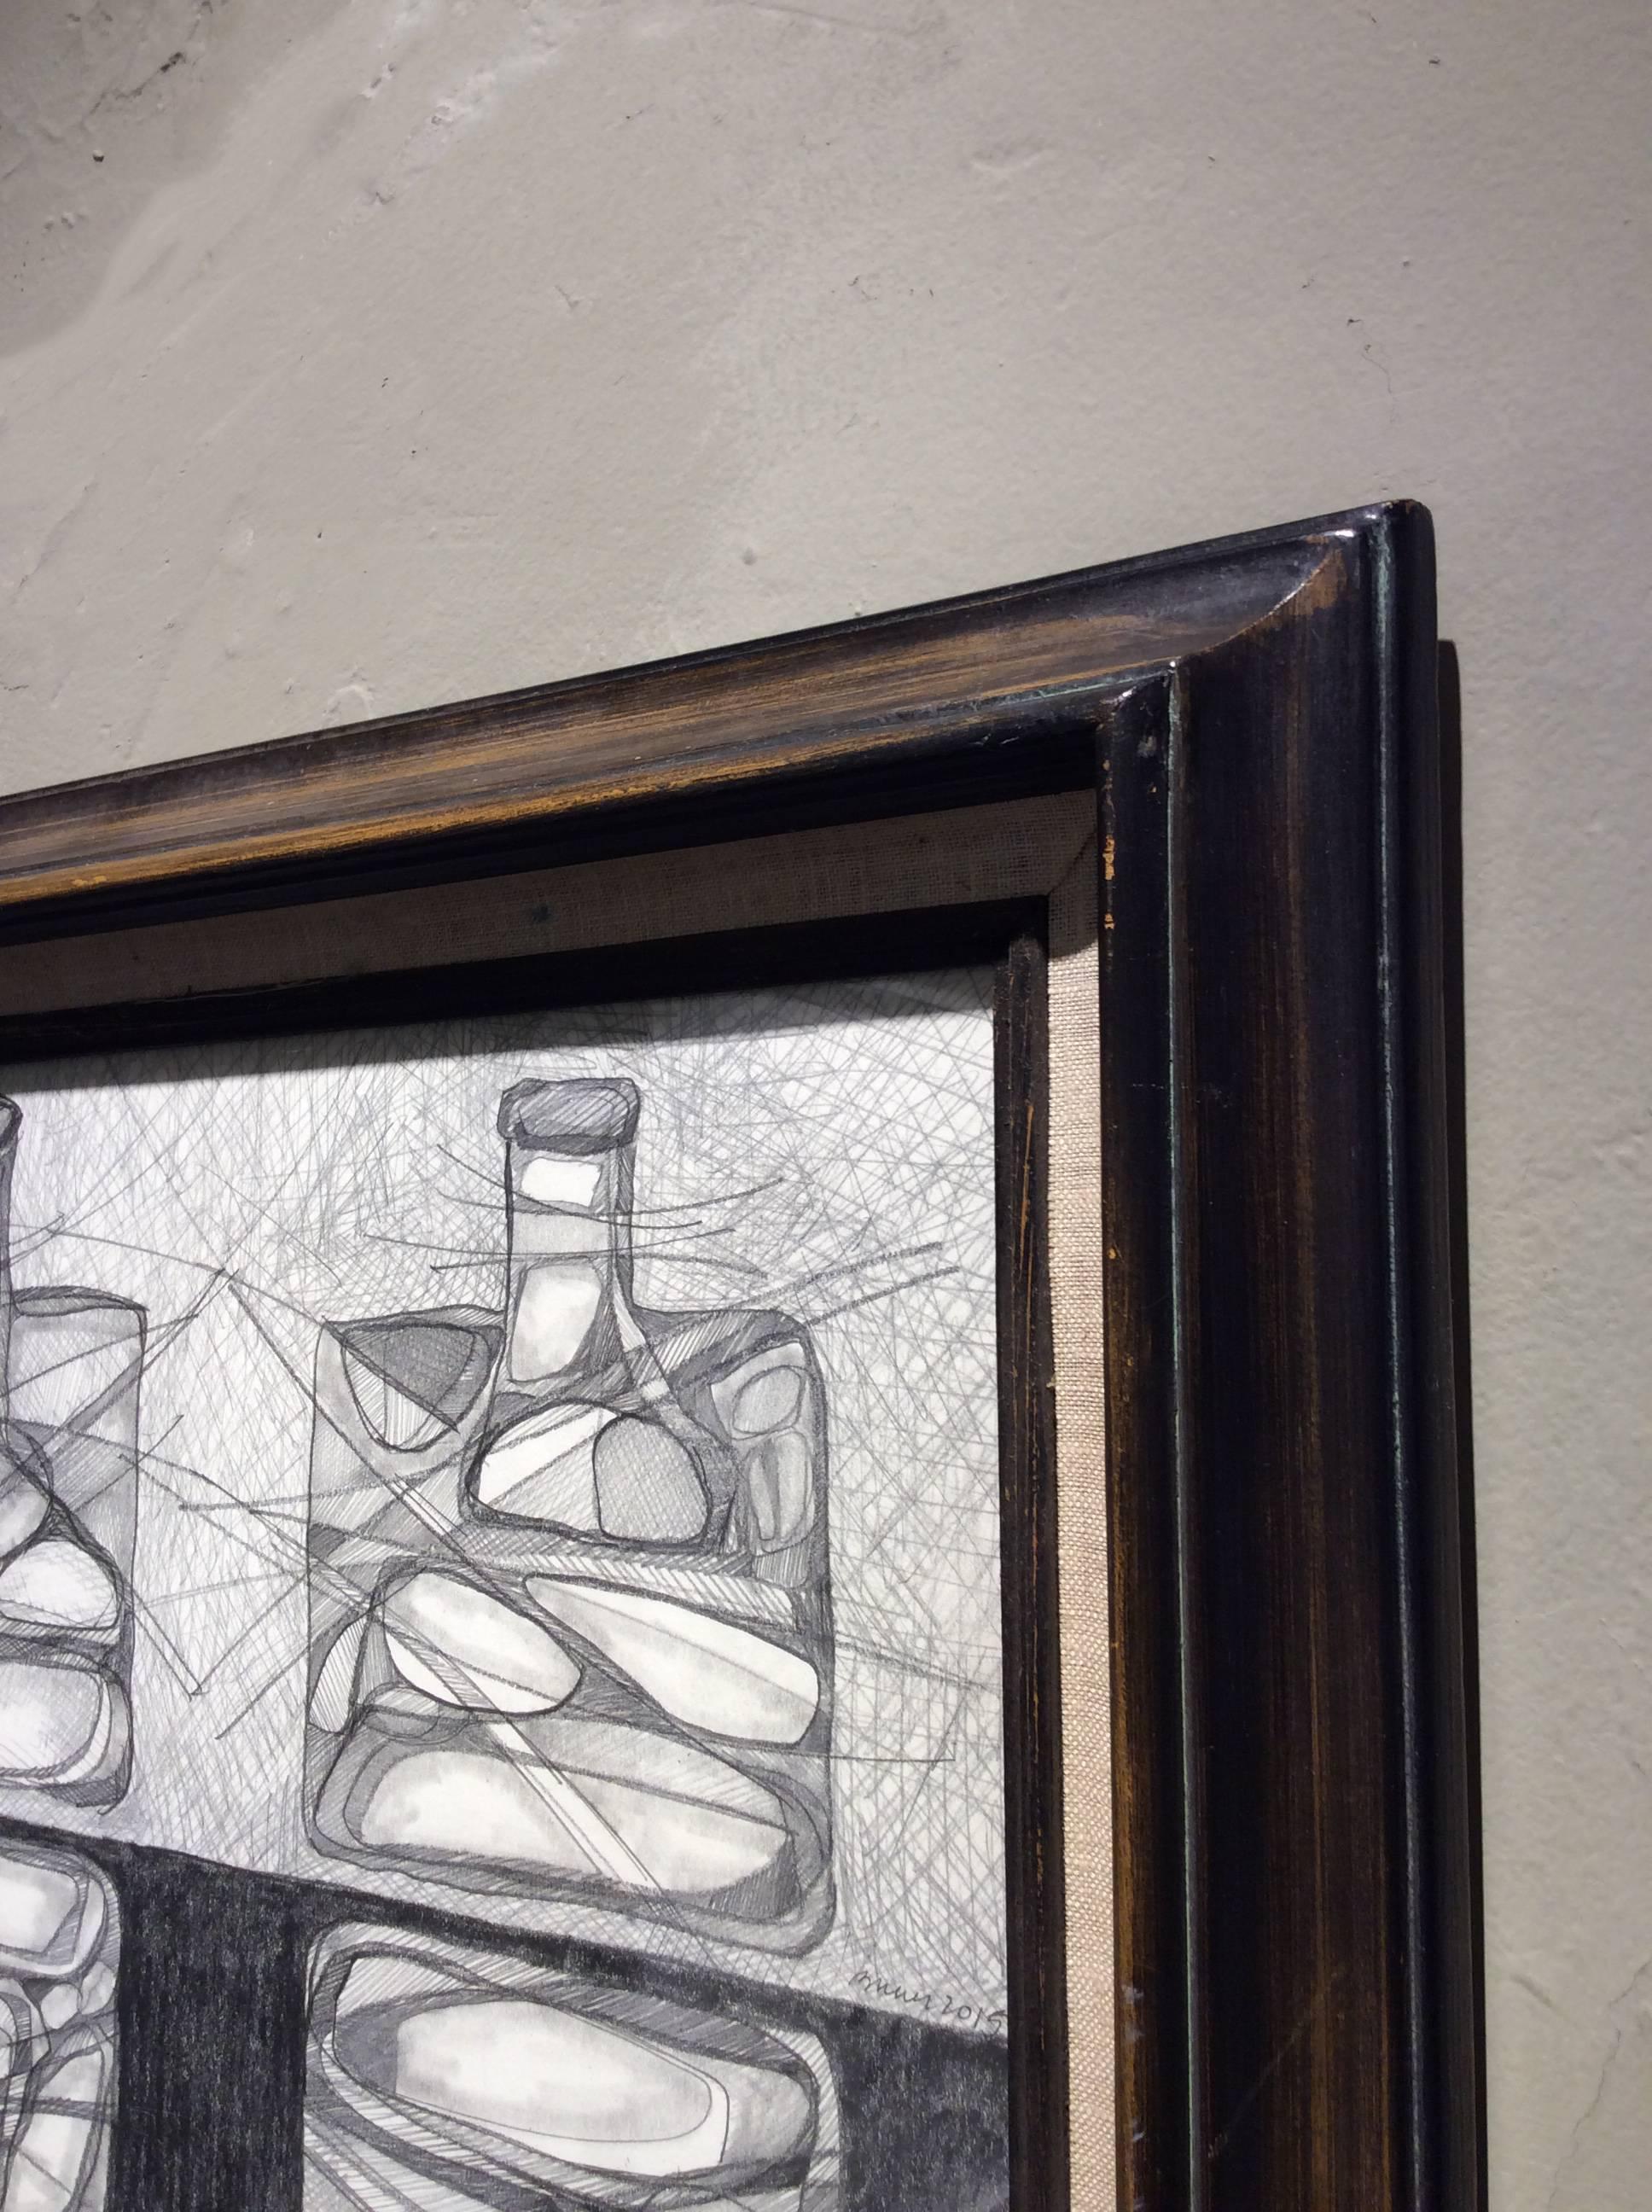 Two Morandi Bottles: Abstract Cubist Style, Modern Drawing in Vintage Wood Frame - Art by David Dew Bruner